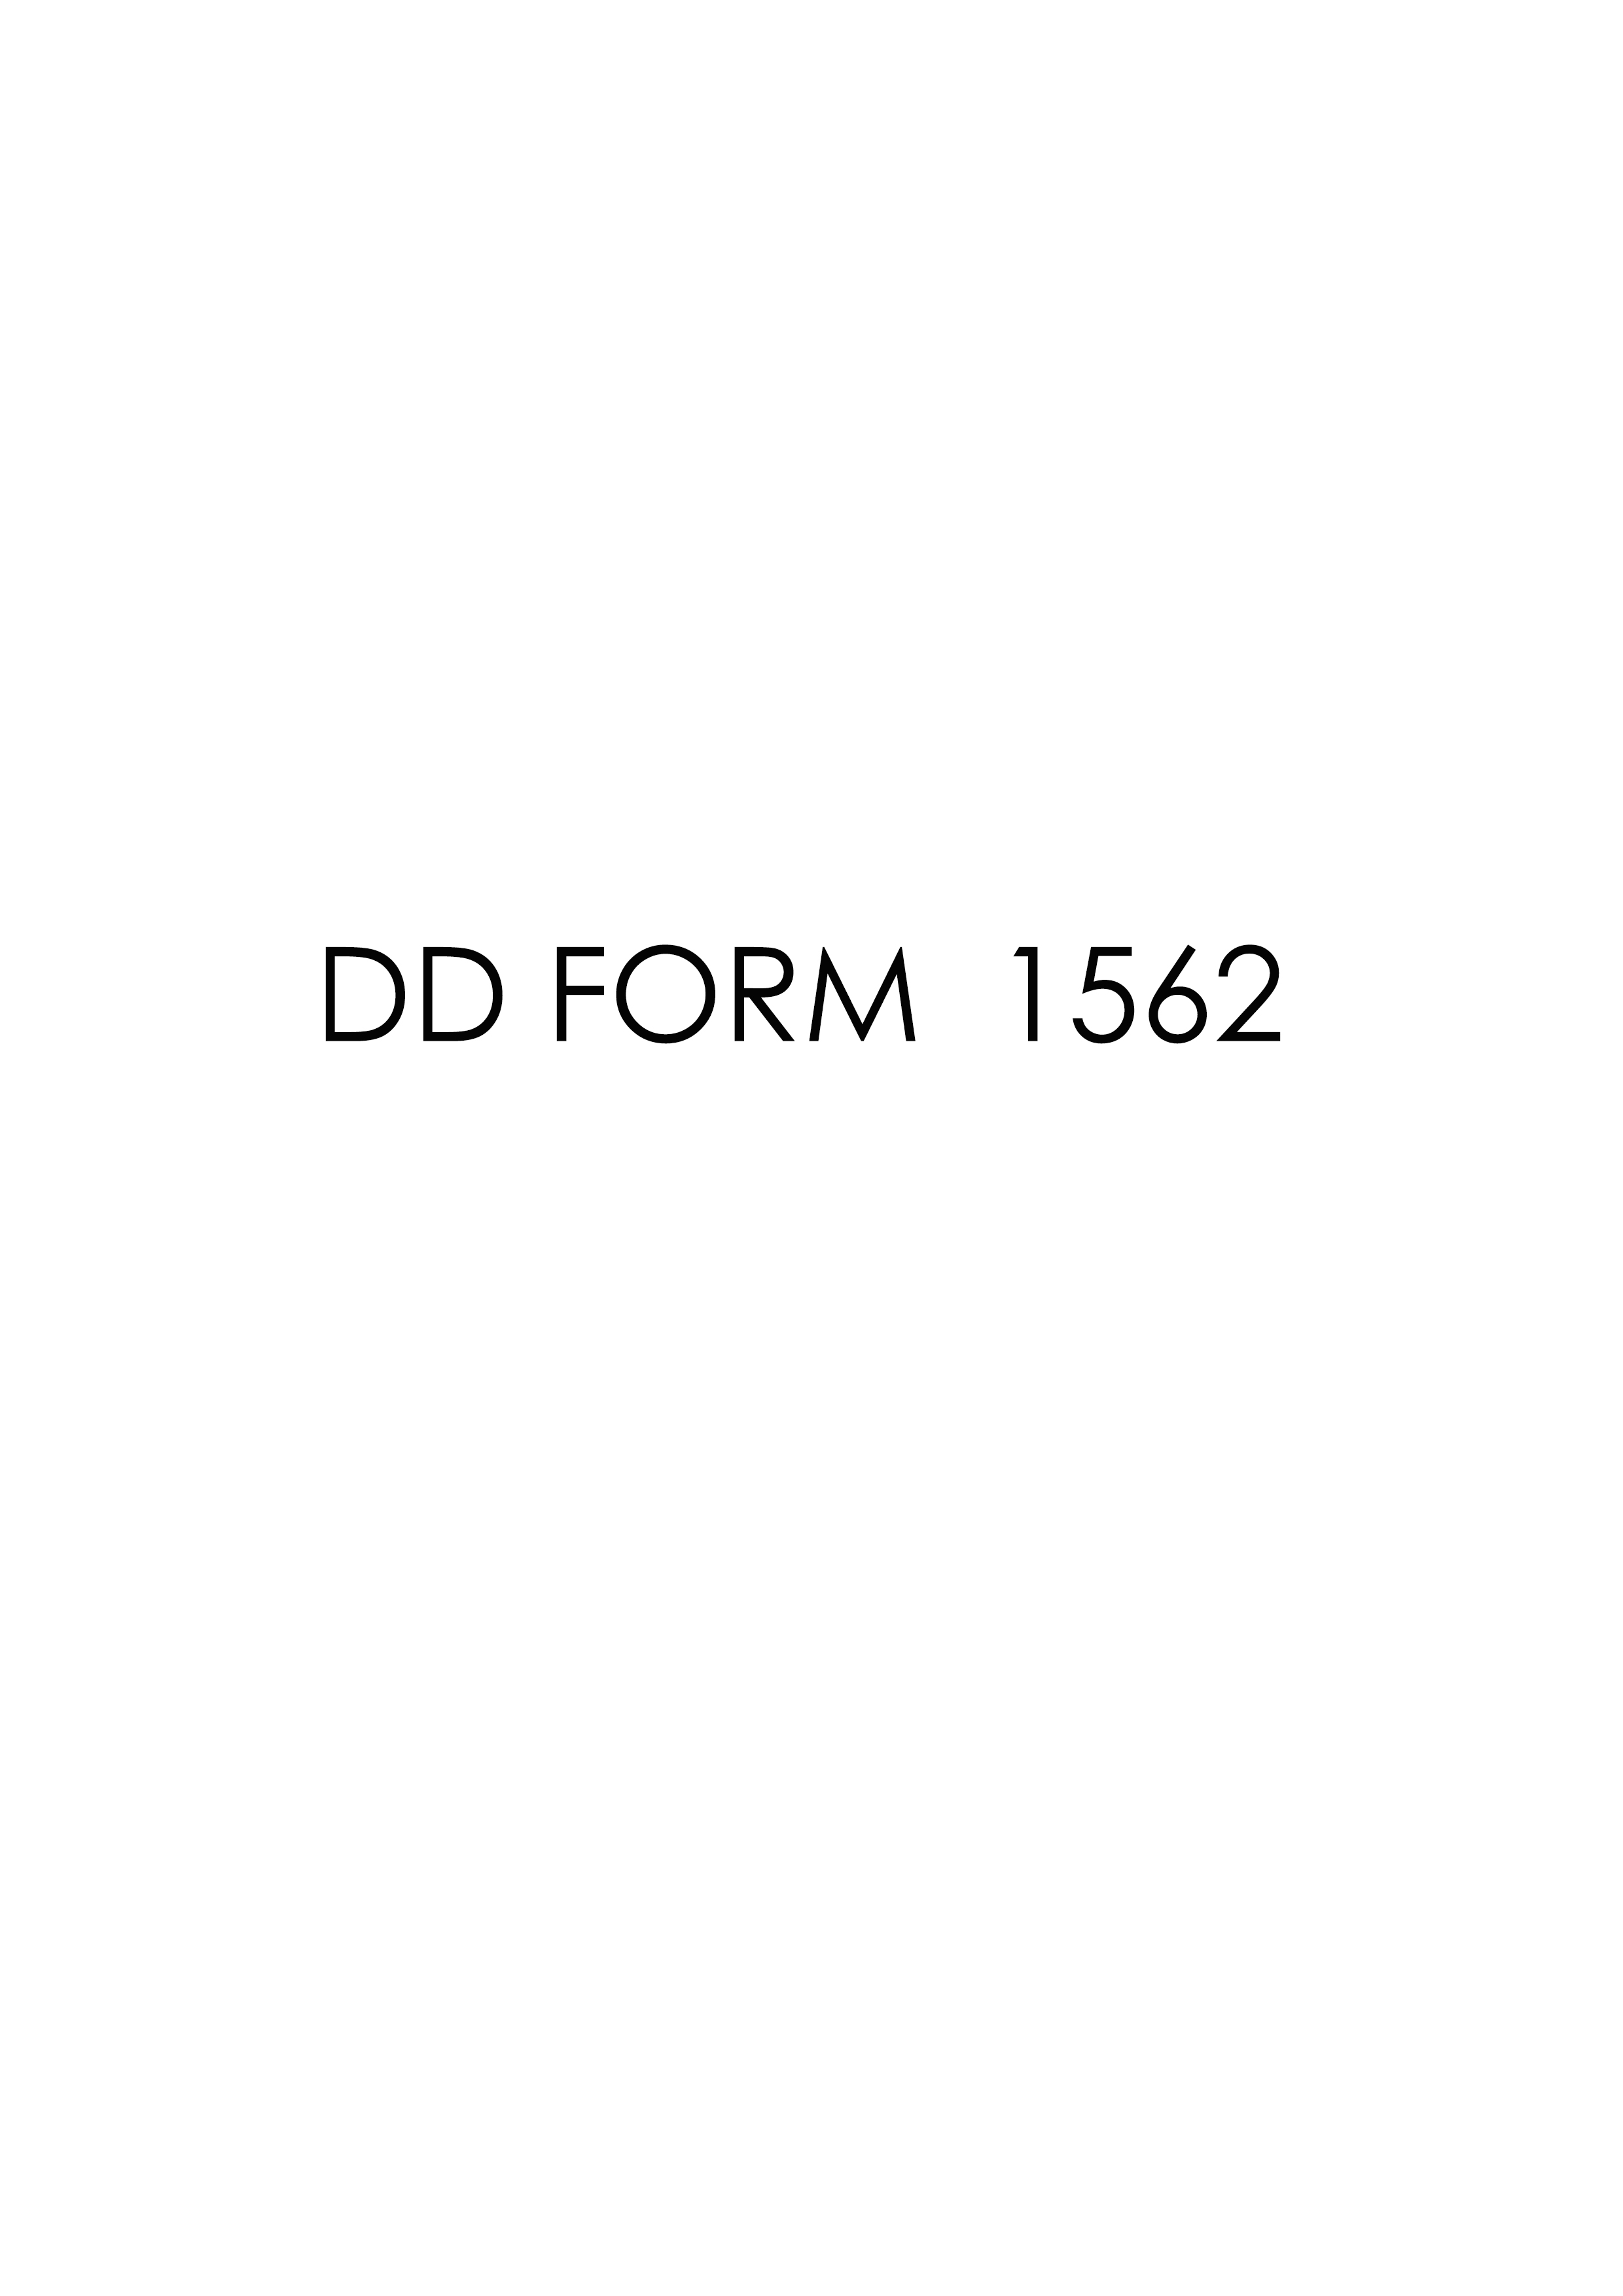 Download dd form 1562